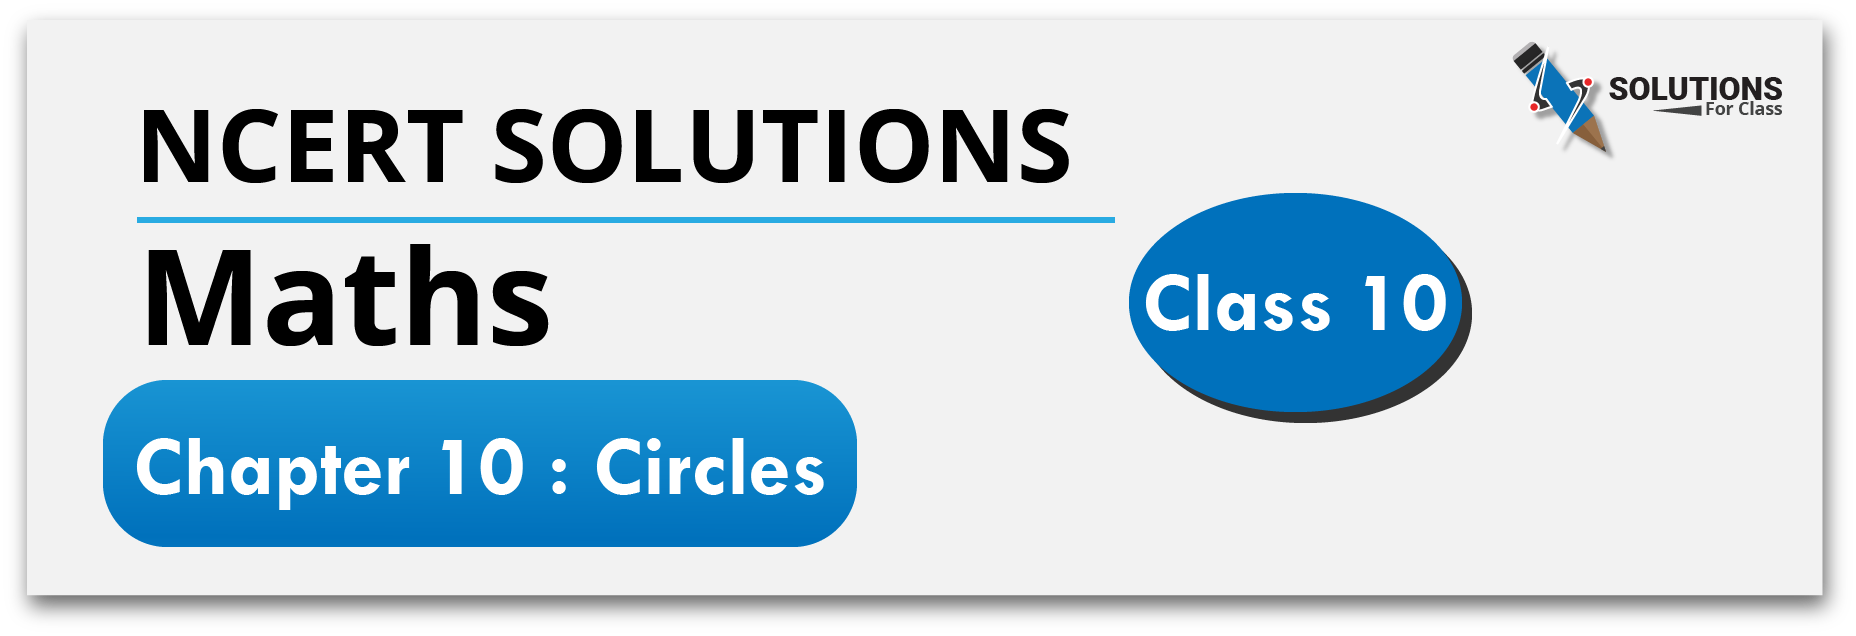 NCERT Solutions For Class 10, Maths, Chapter 10, Circles